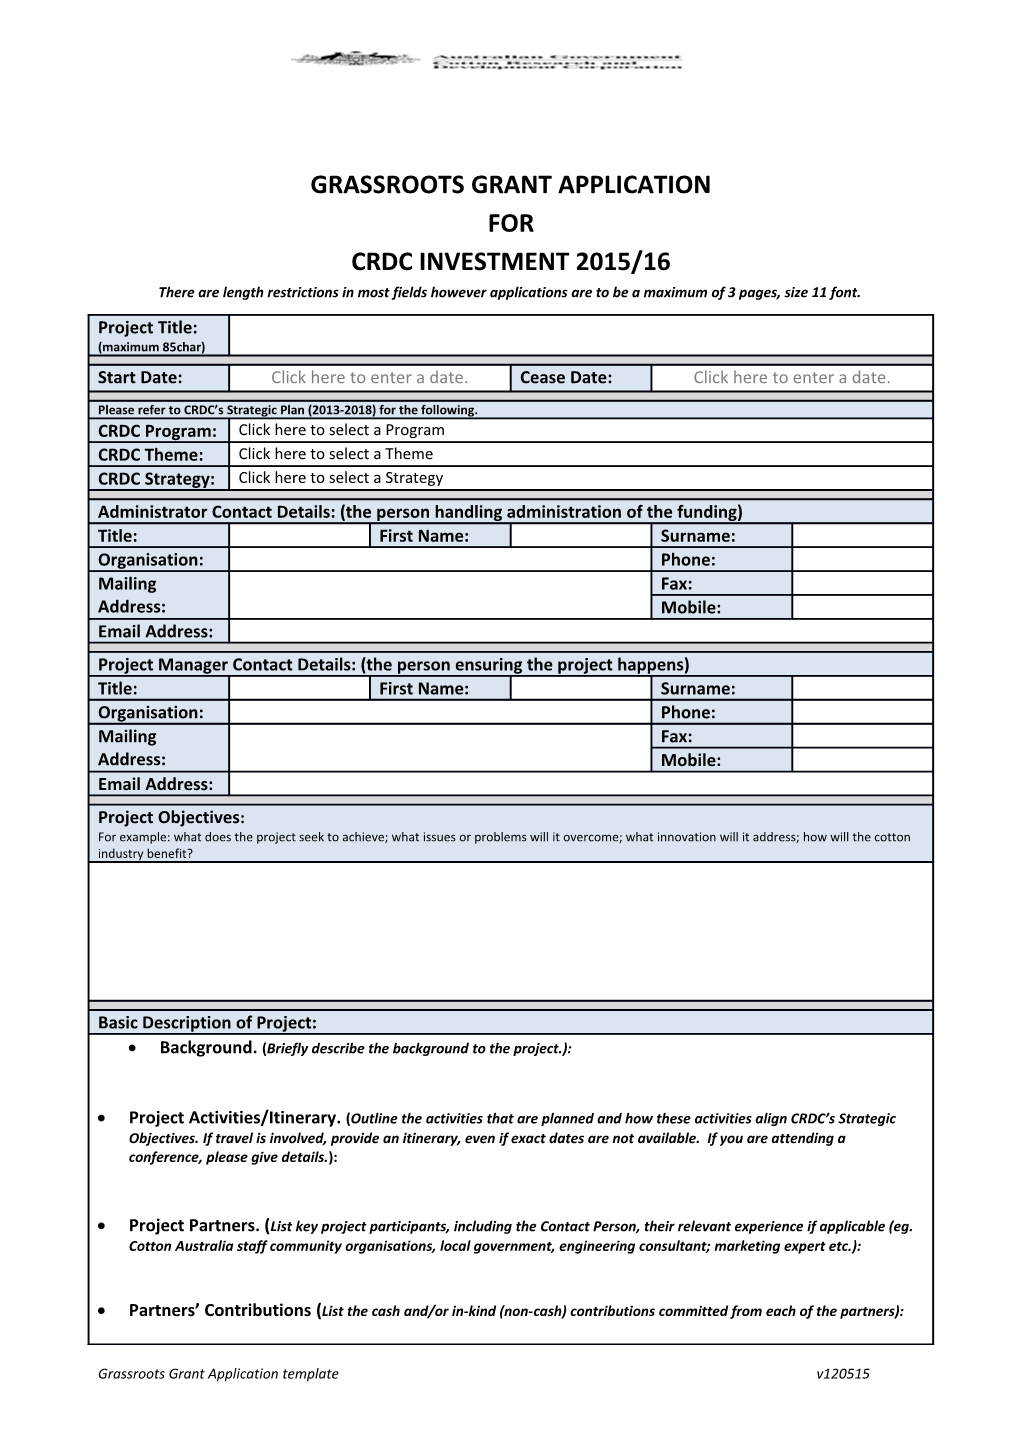 Crdc Investment 2015/16